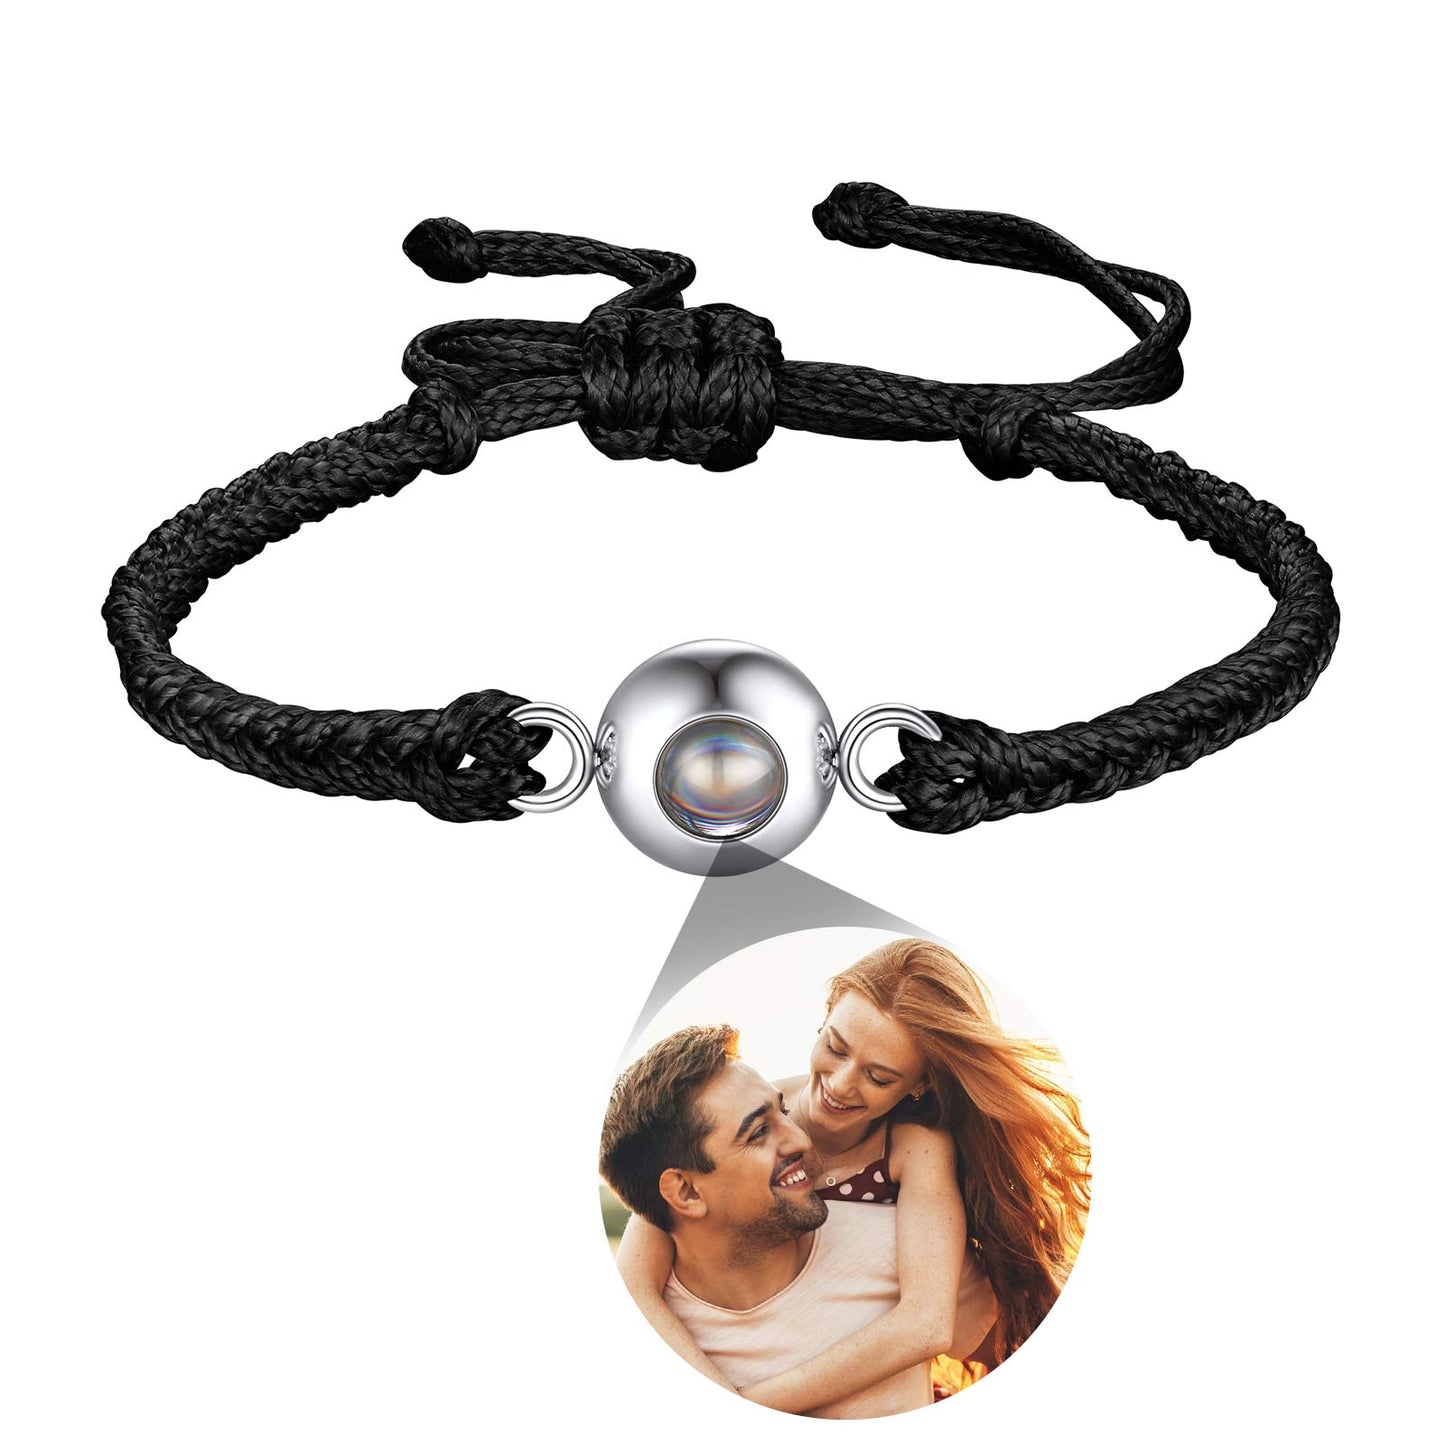 Personalized Photo Projection Bracelet Braided Rope Bracelet